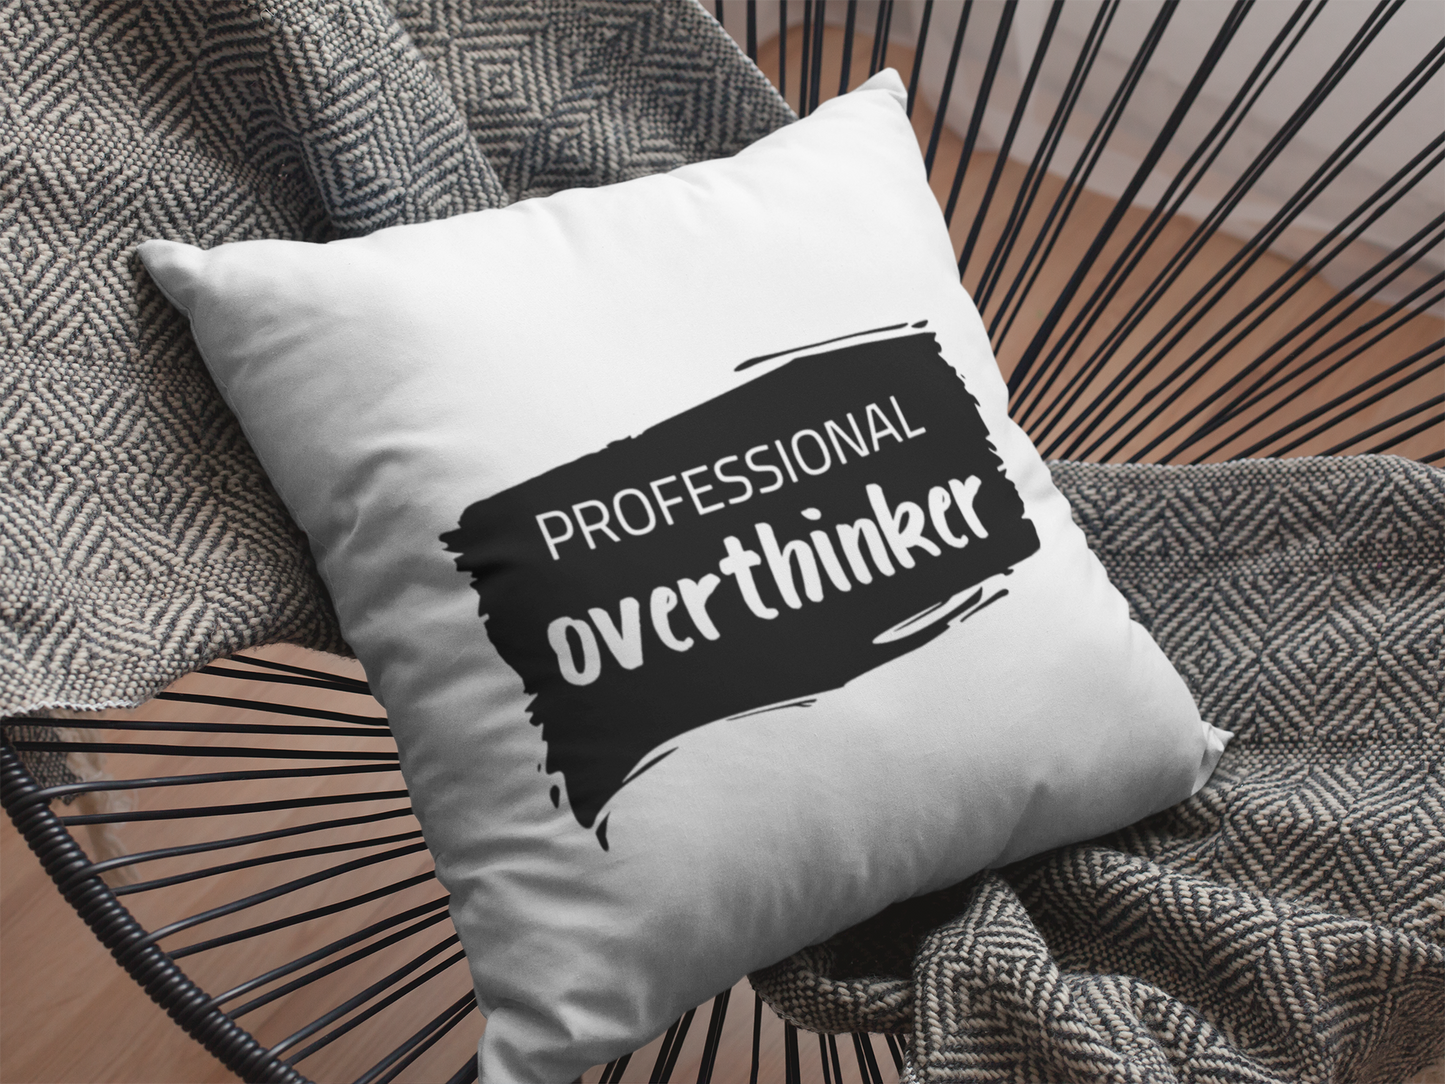 Professional Overthinker  Printed Cushion